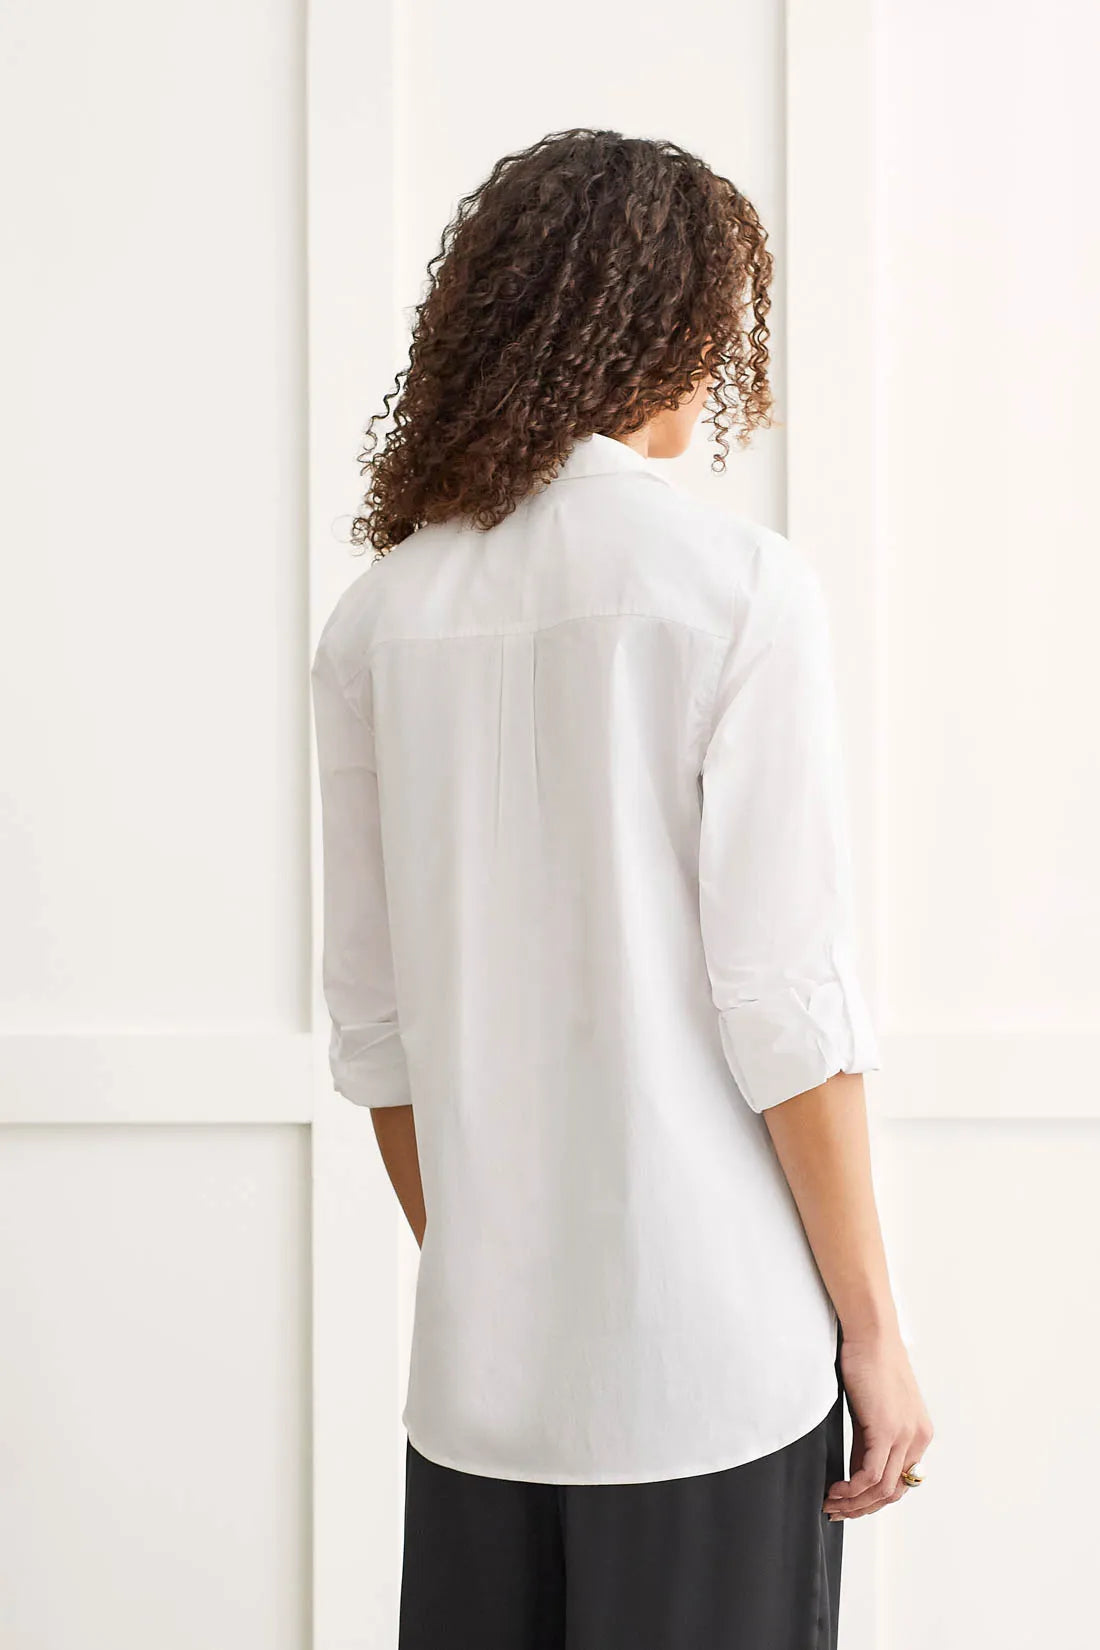 TRBL “ THE Shirt” Classic White Button Up Blous